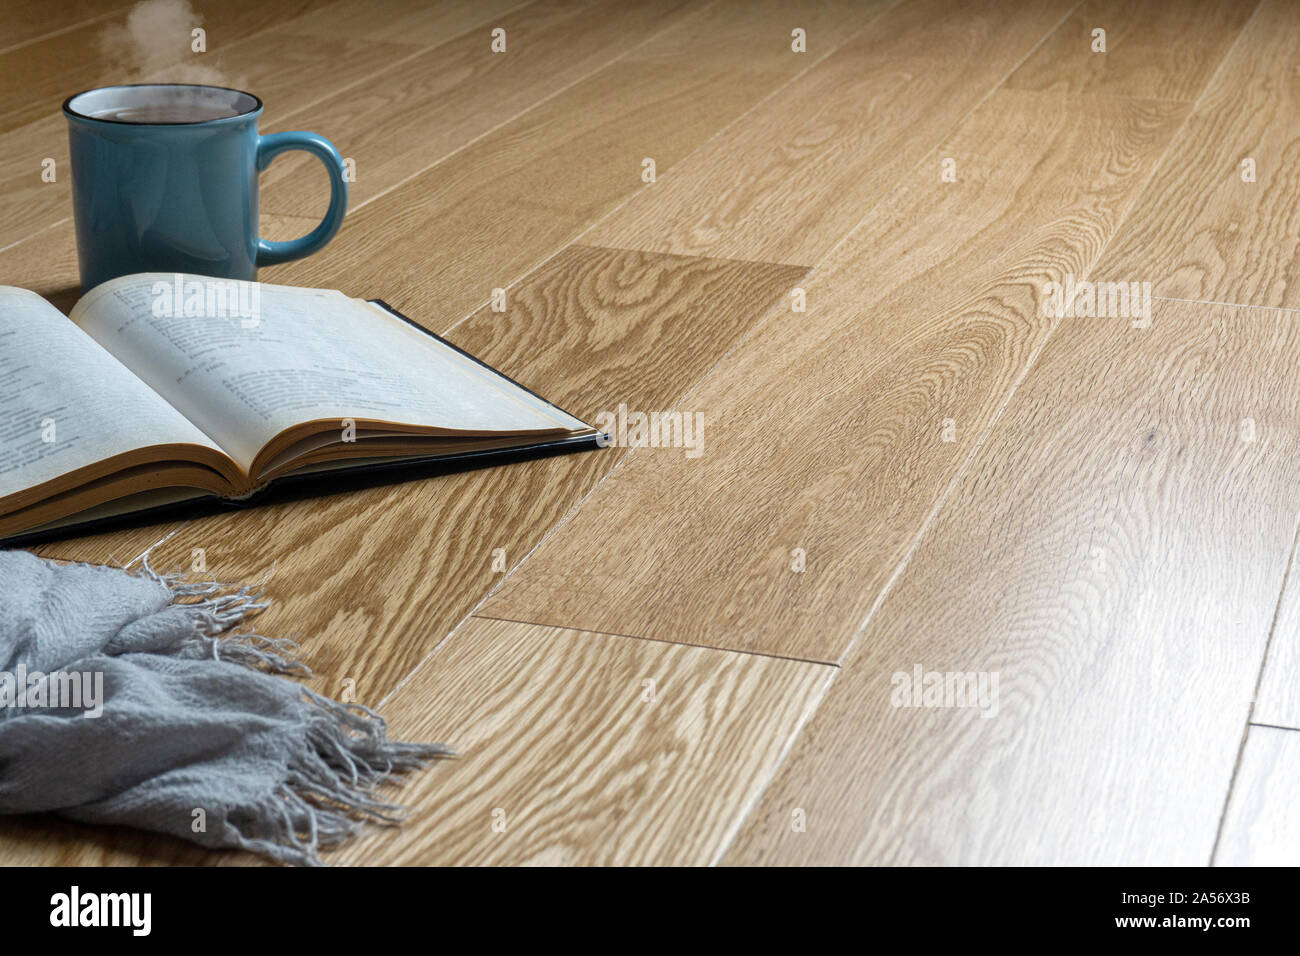 Parquet floor. Wooden flooring for living rooms. Copy space. Stock Photo